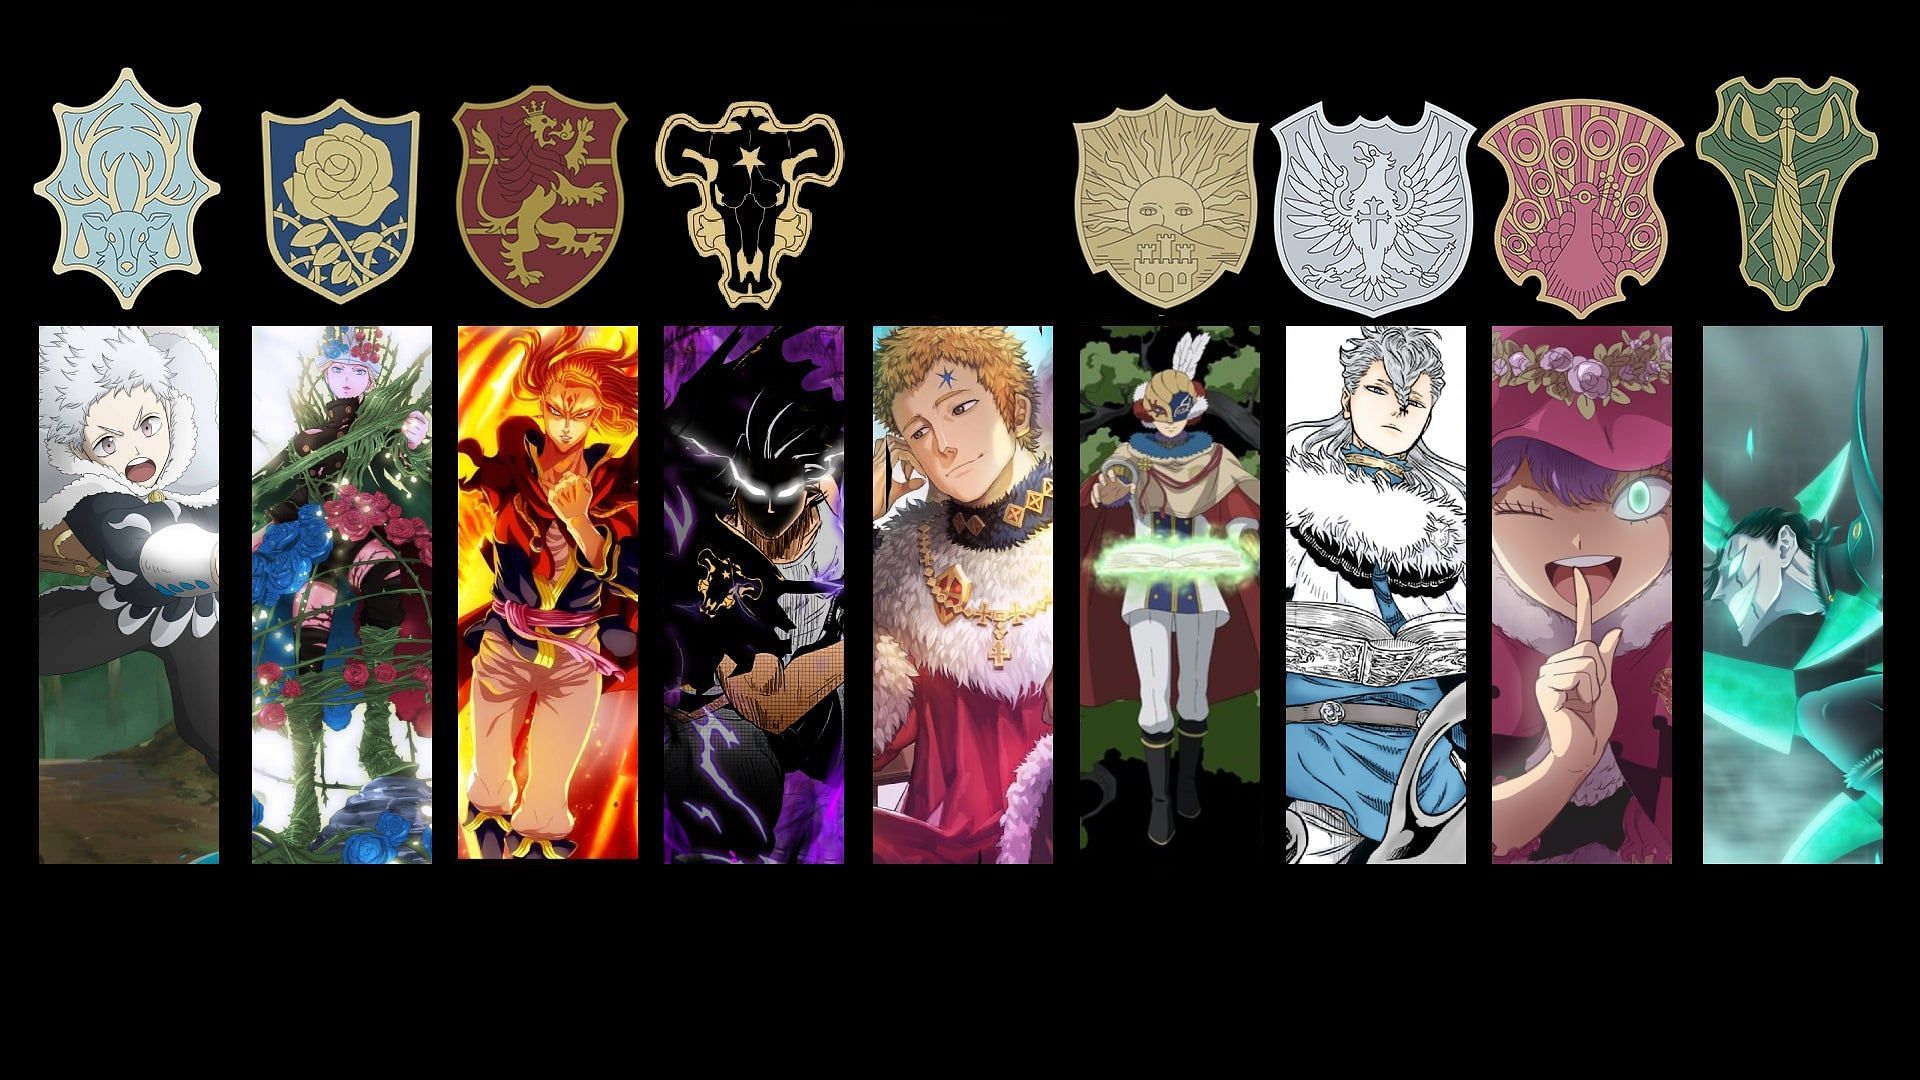 The Magic Knight Squad Captains, plus the Wizard King (Image via redballllllls/Reddit)